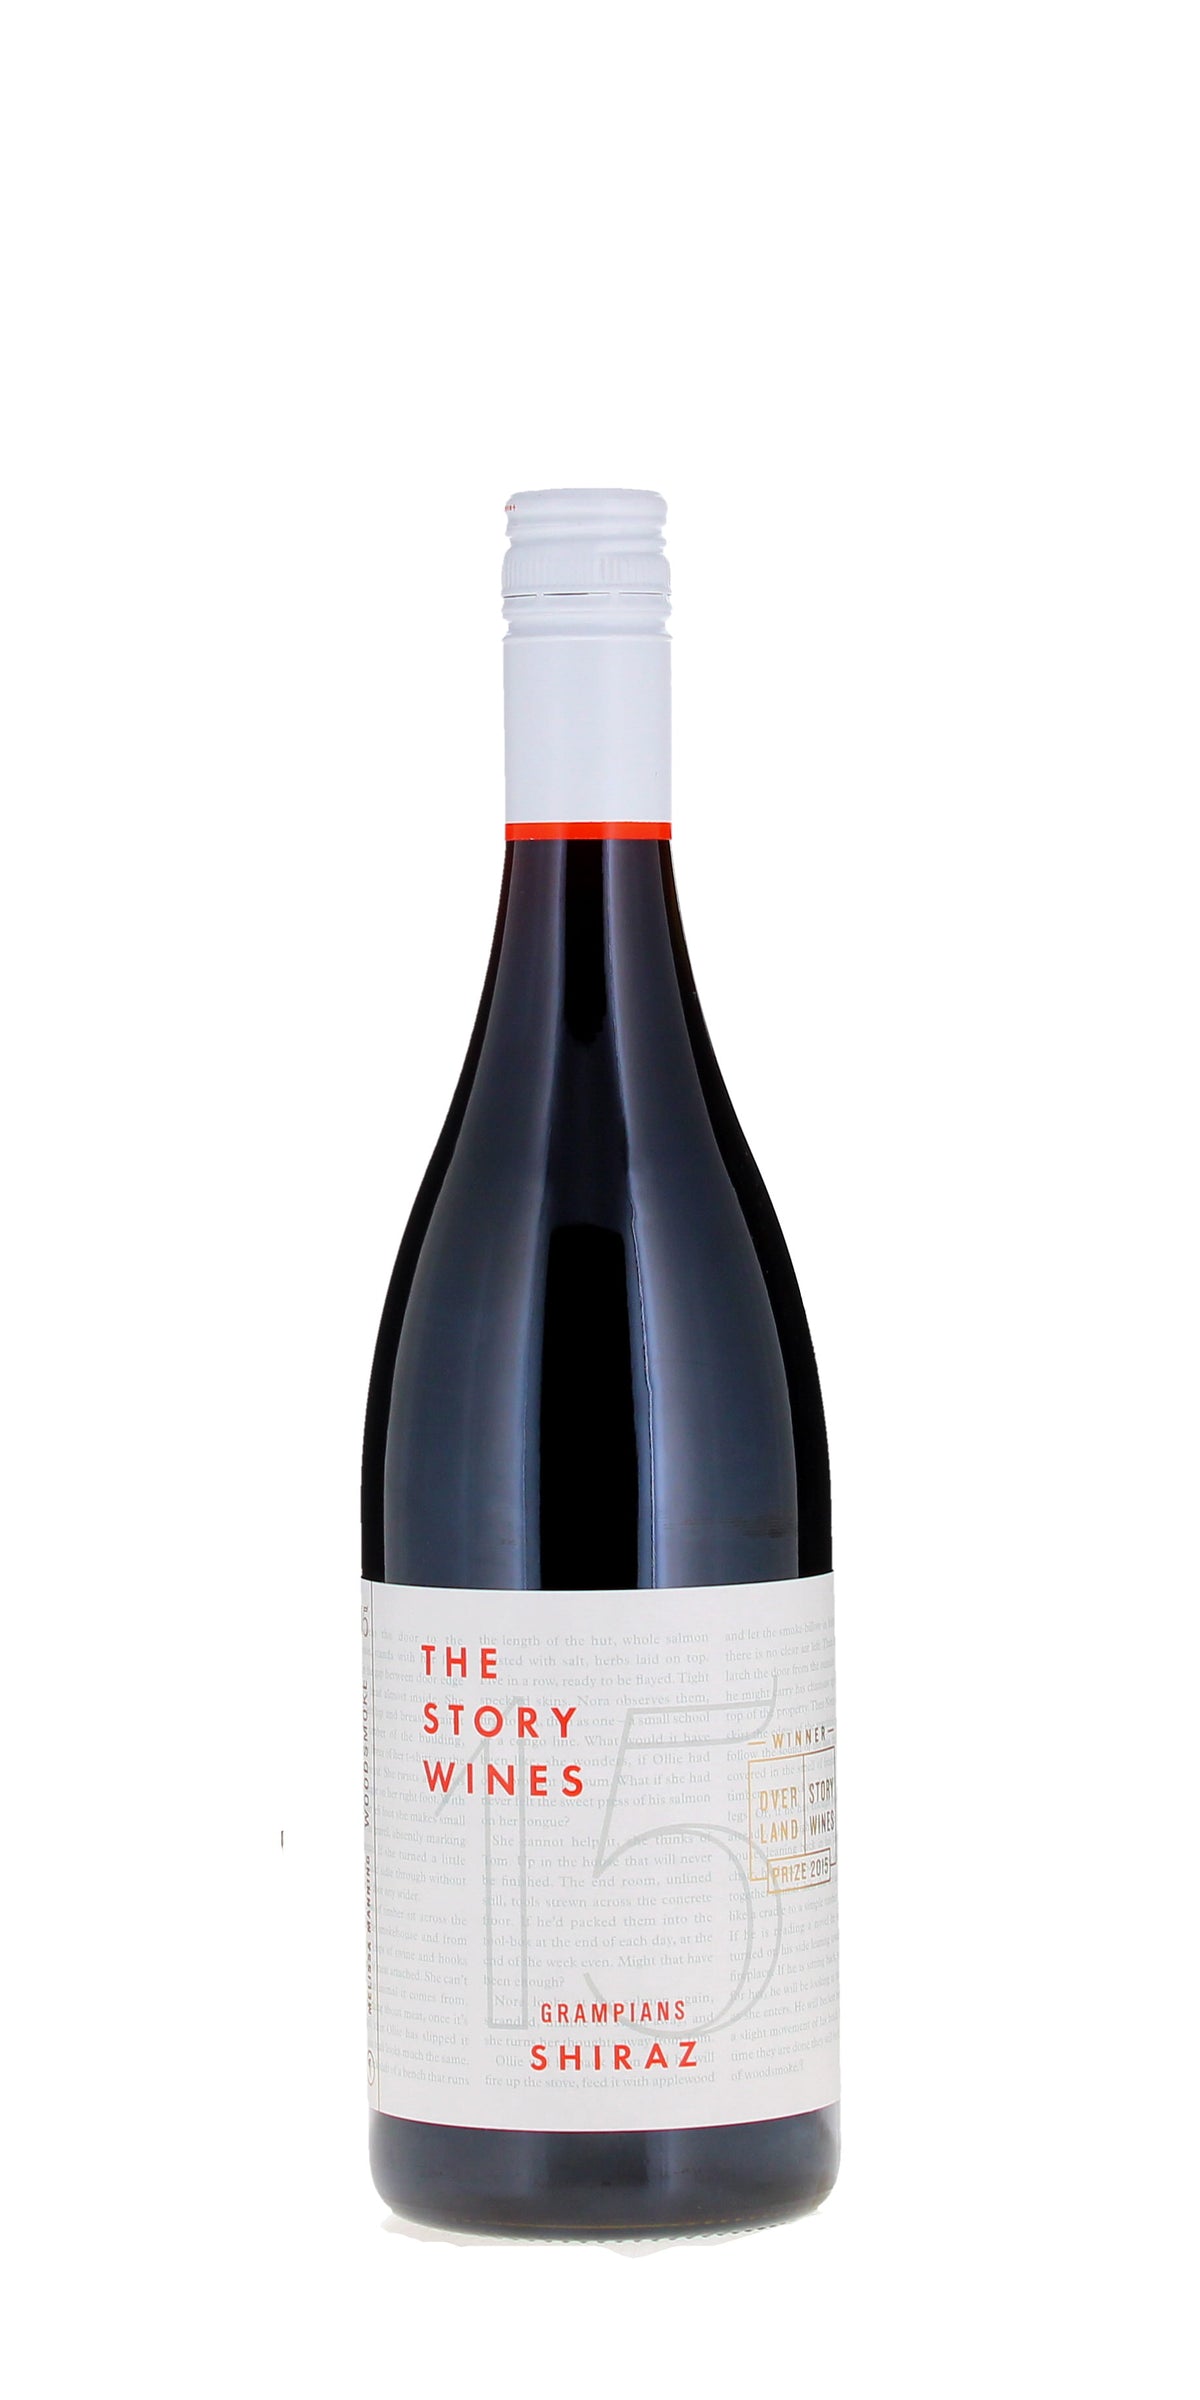 The Story Wines, Shiraz, Grampians, Australia 2015